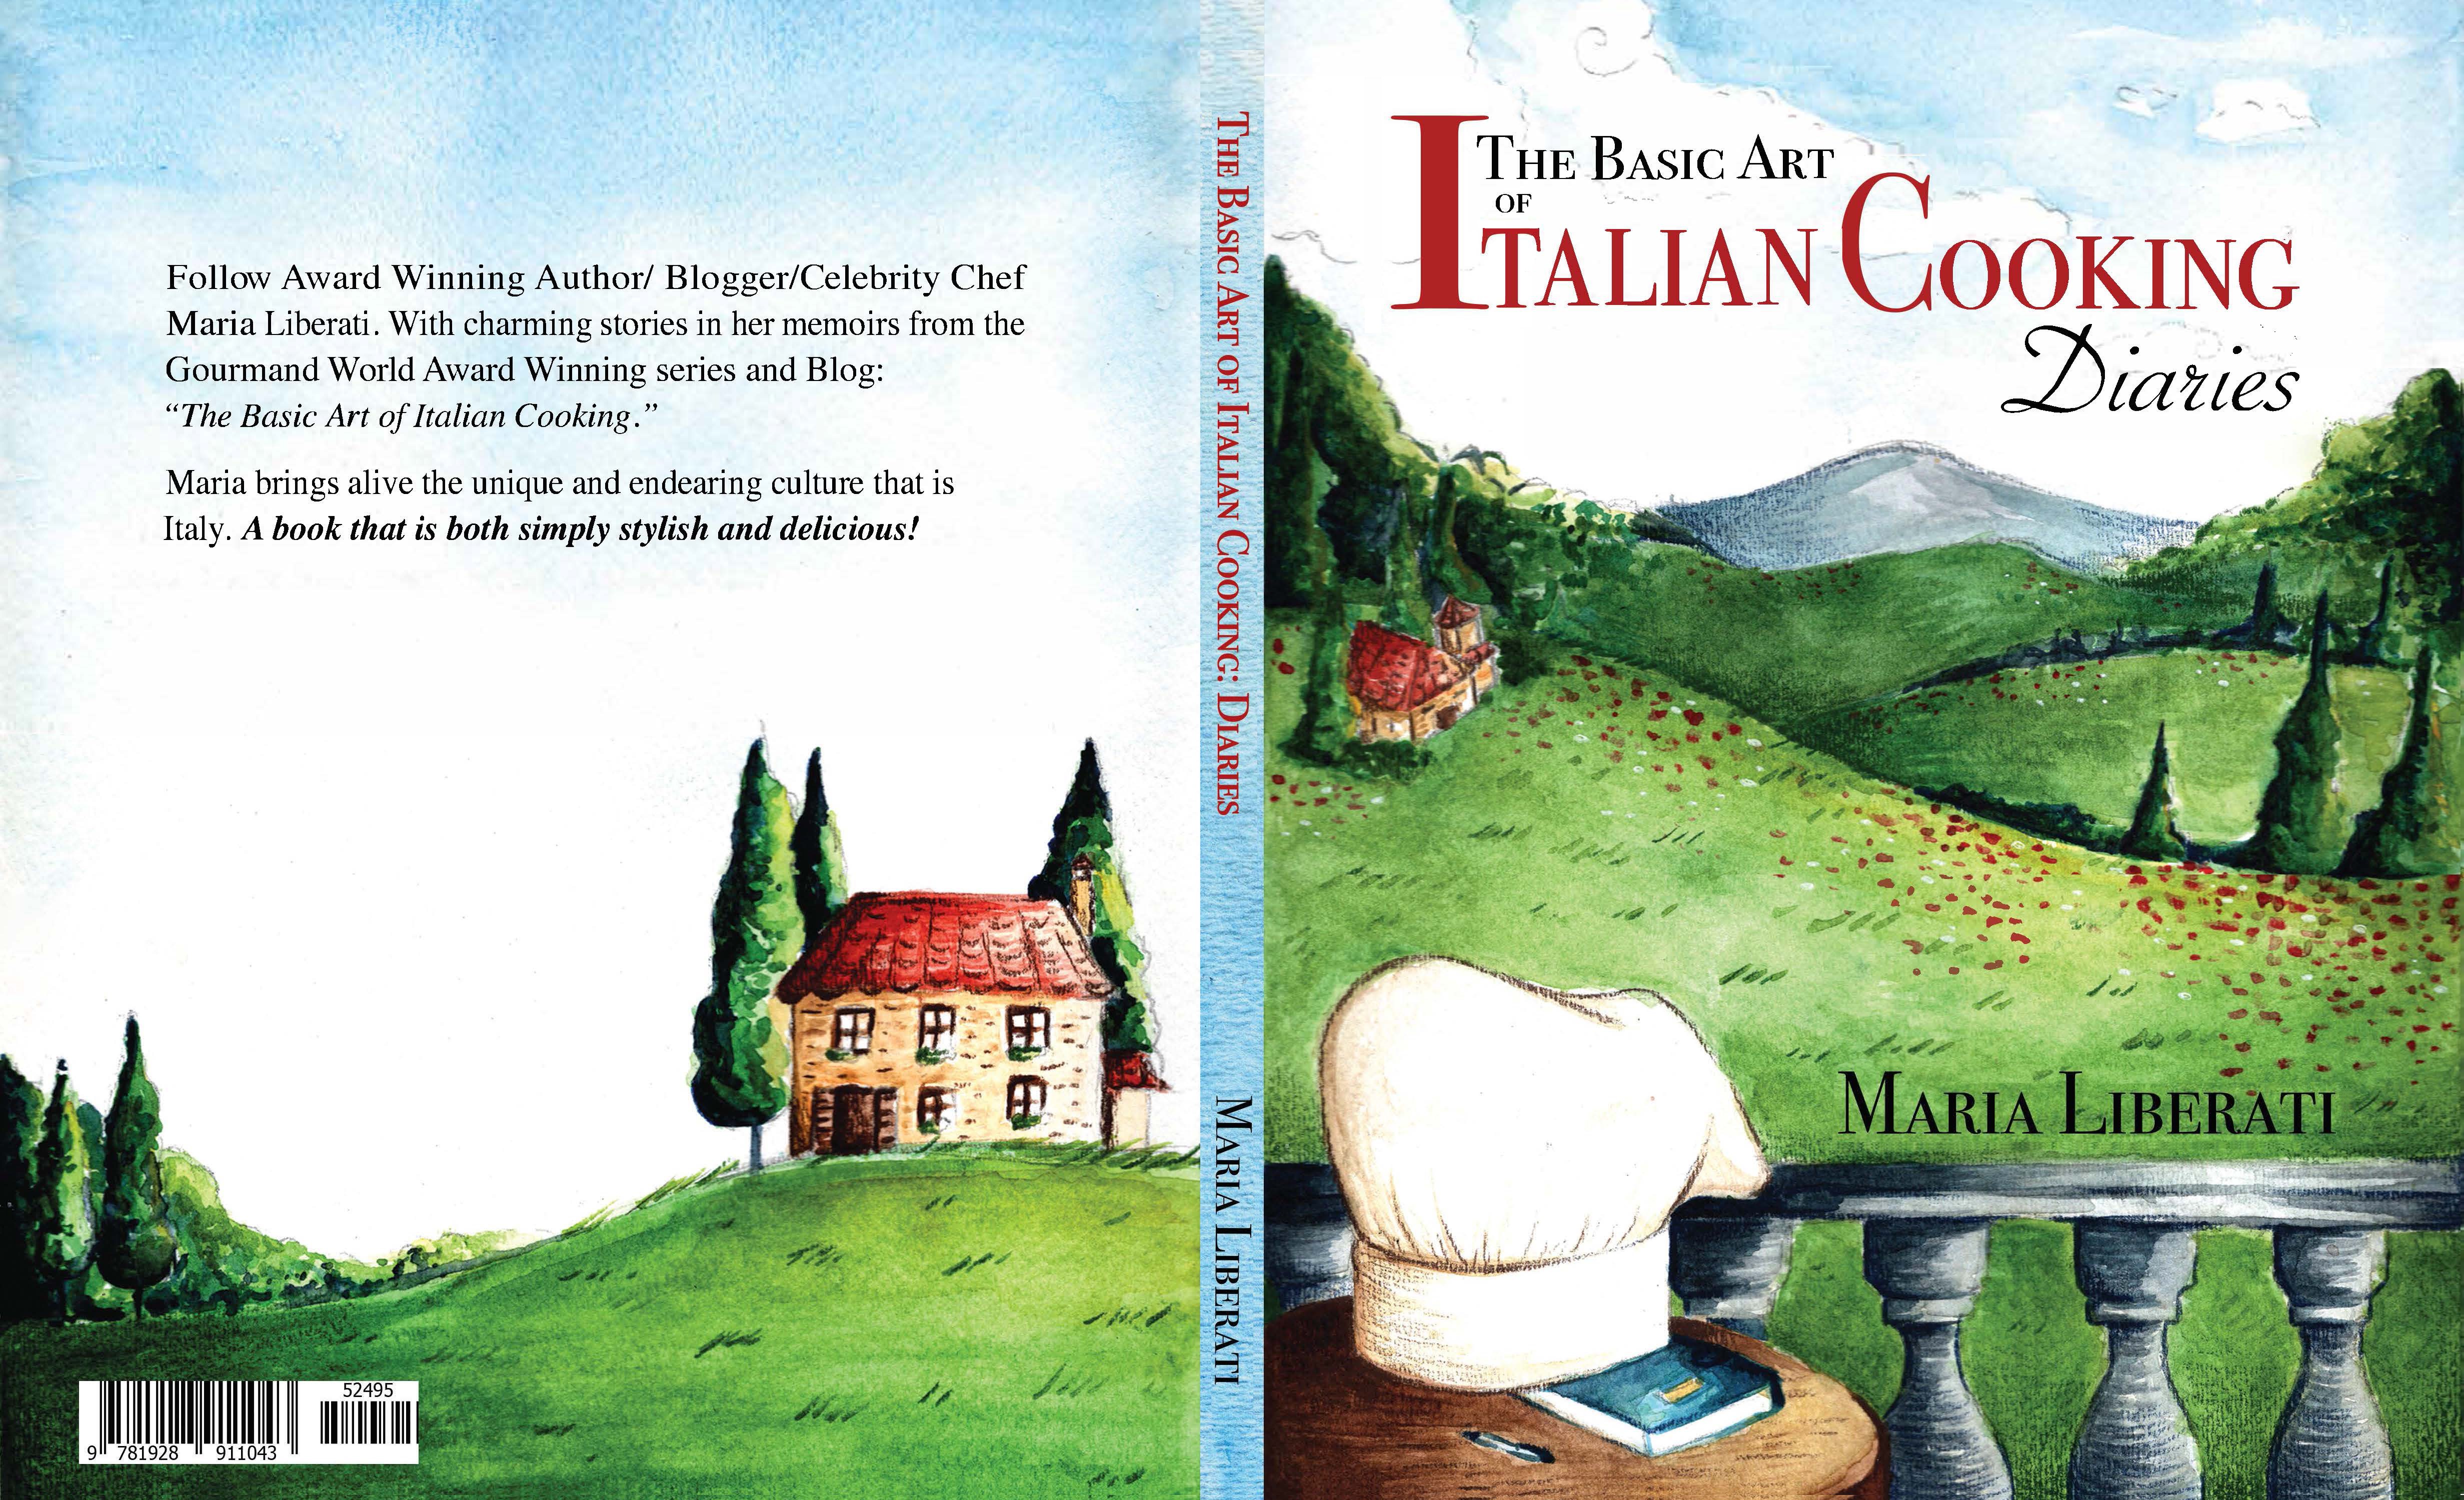 The Basic Art of Italian Cooking Diaries: Seasons